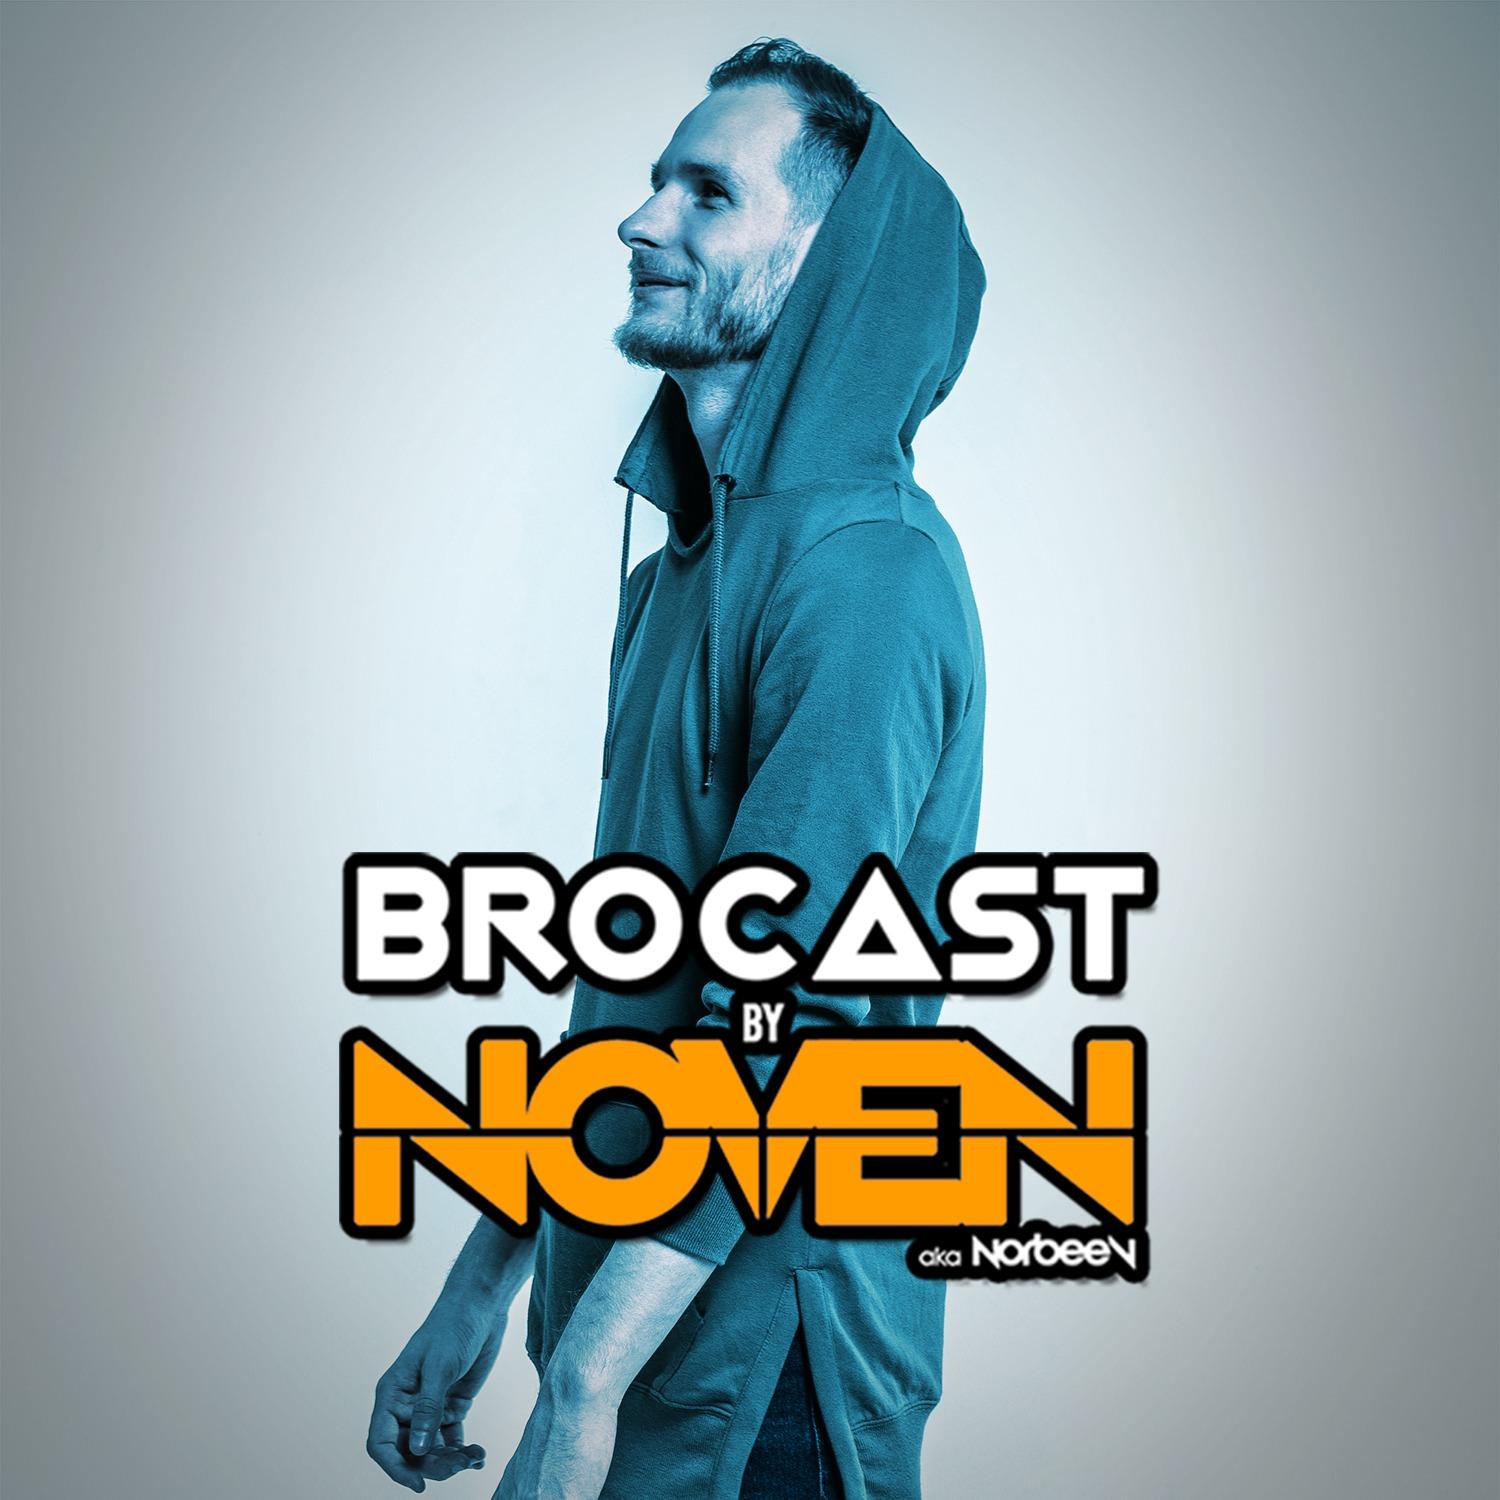 Brocast by Noven aka Norbeev